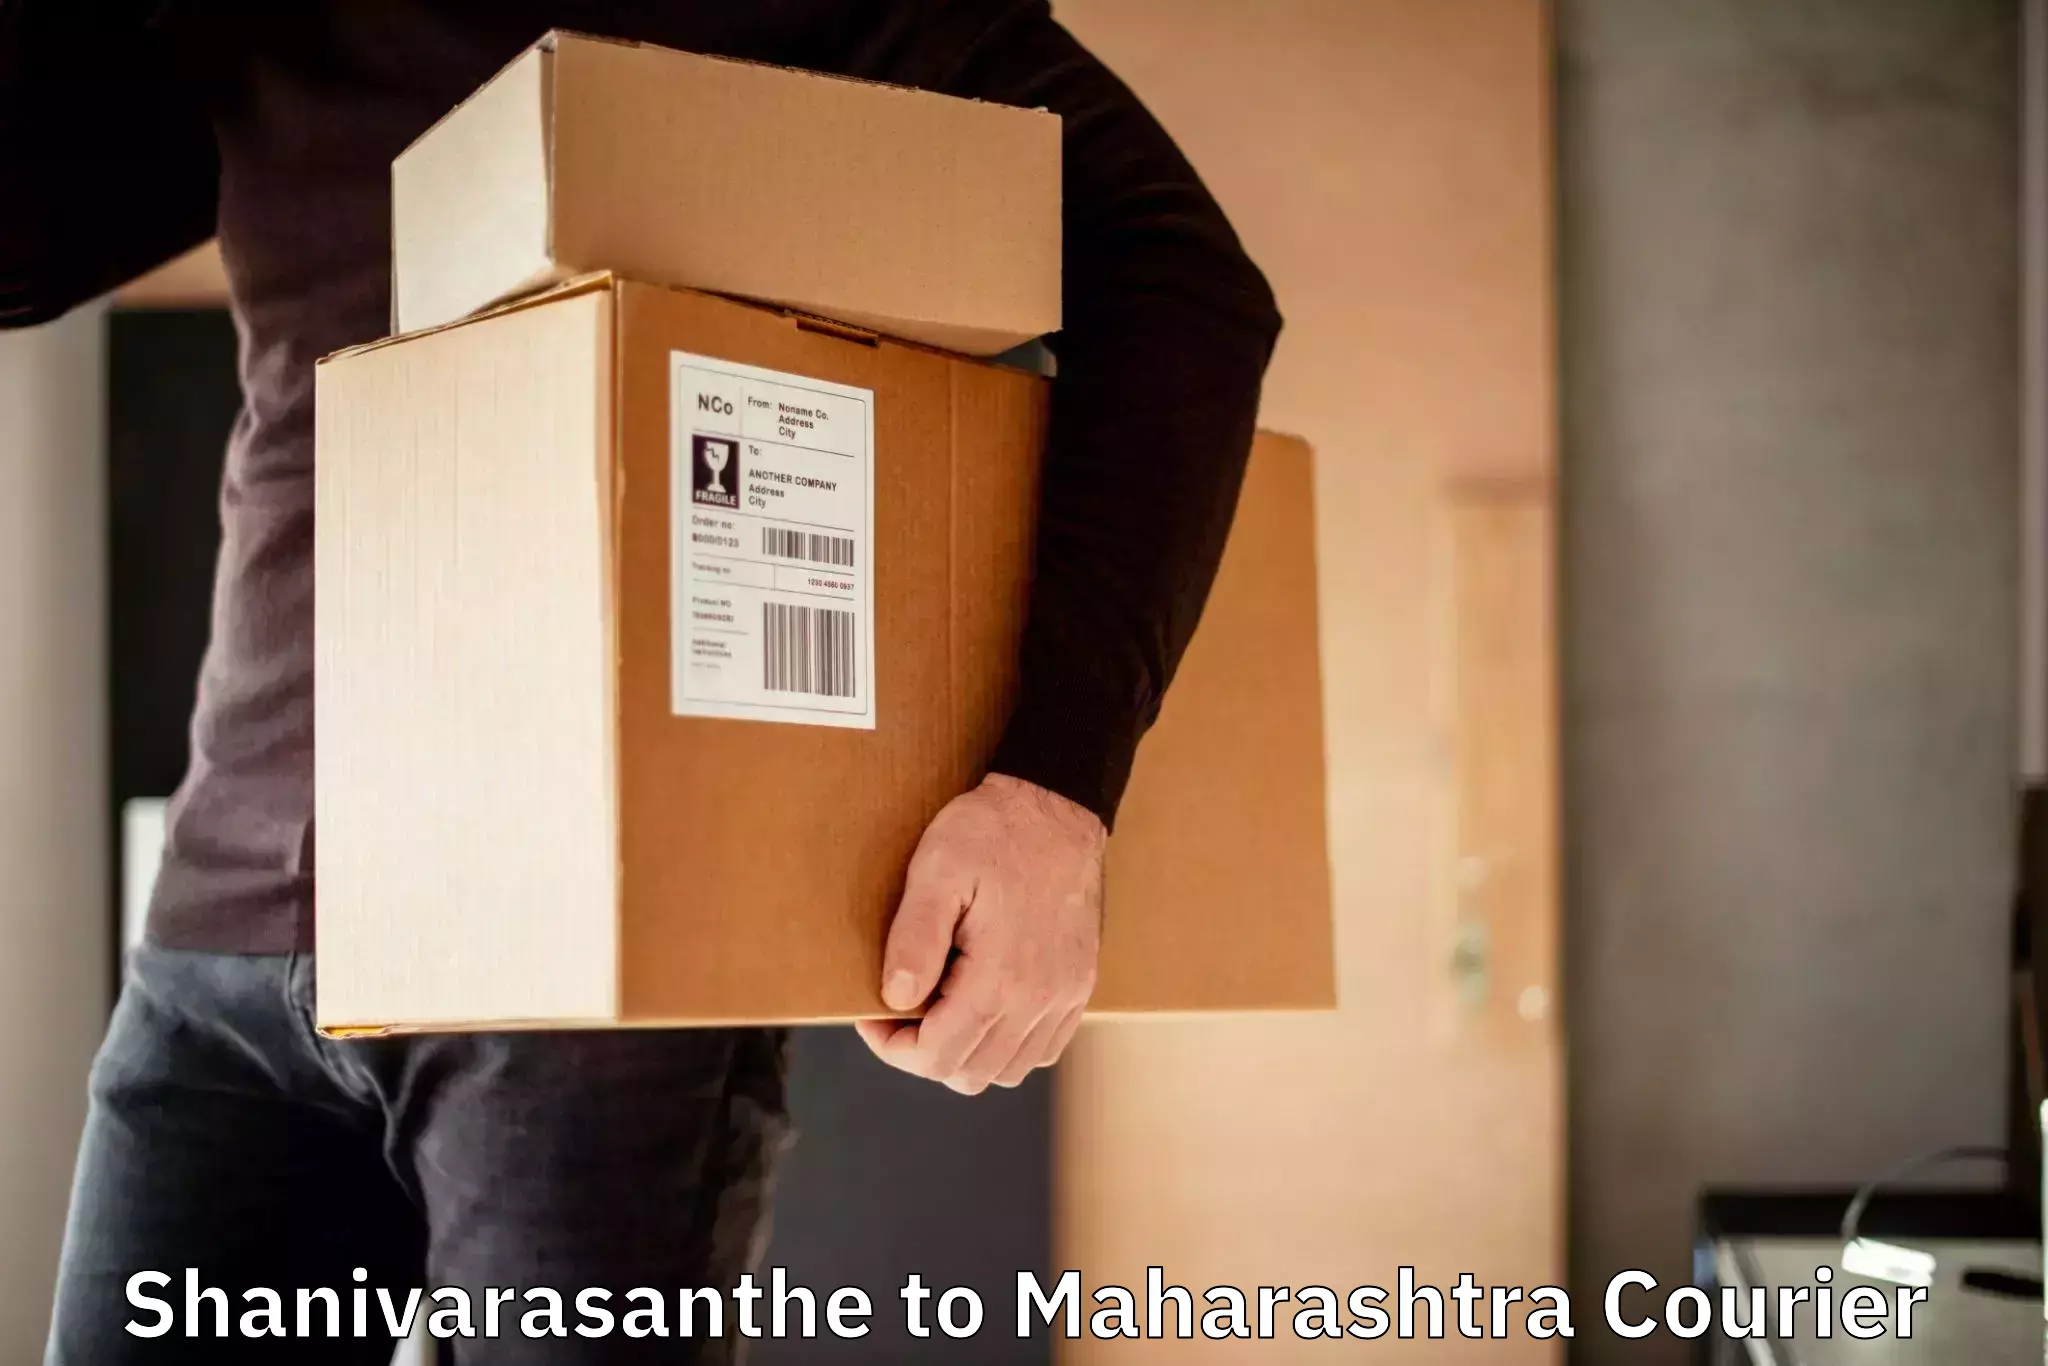 Flexible delivery schedules Shanivarasanthe to Maharashtra